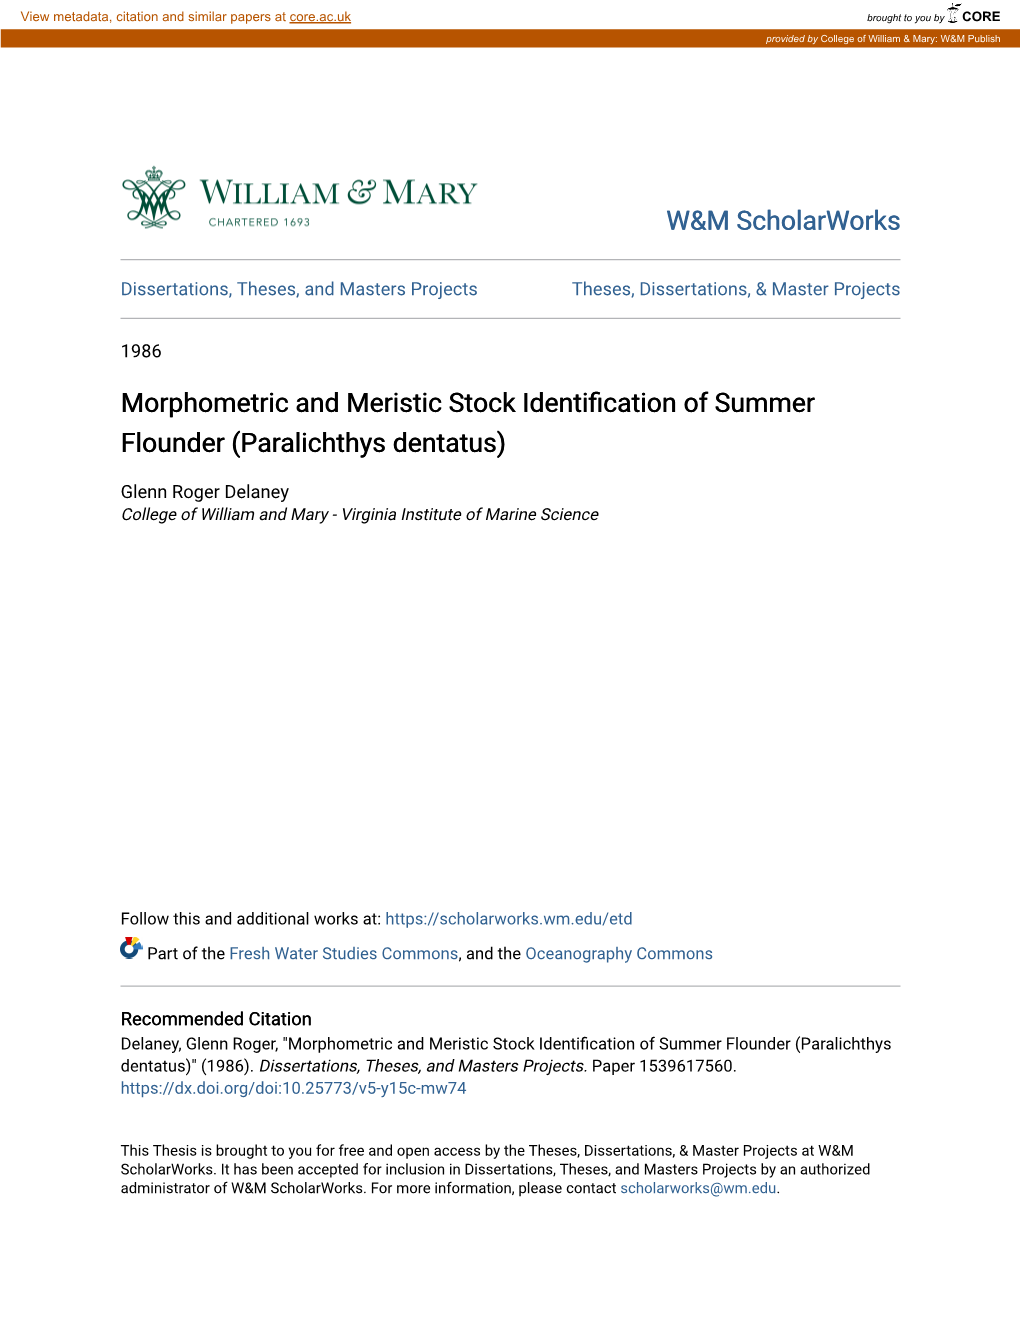 Morphometric and Meristic Stock Identification of Summer Flounder (Paralichthys Dentatus)